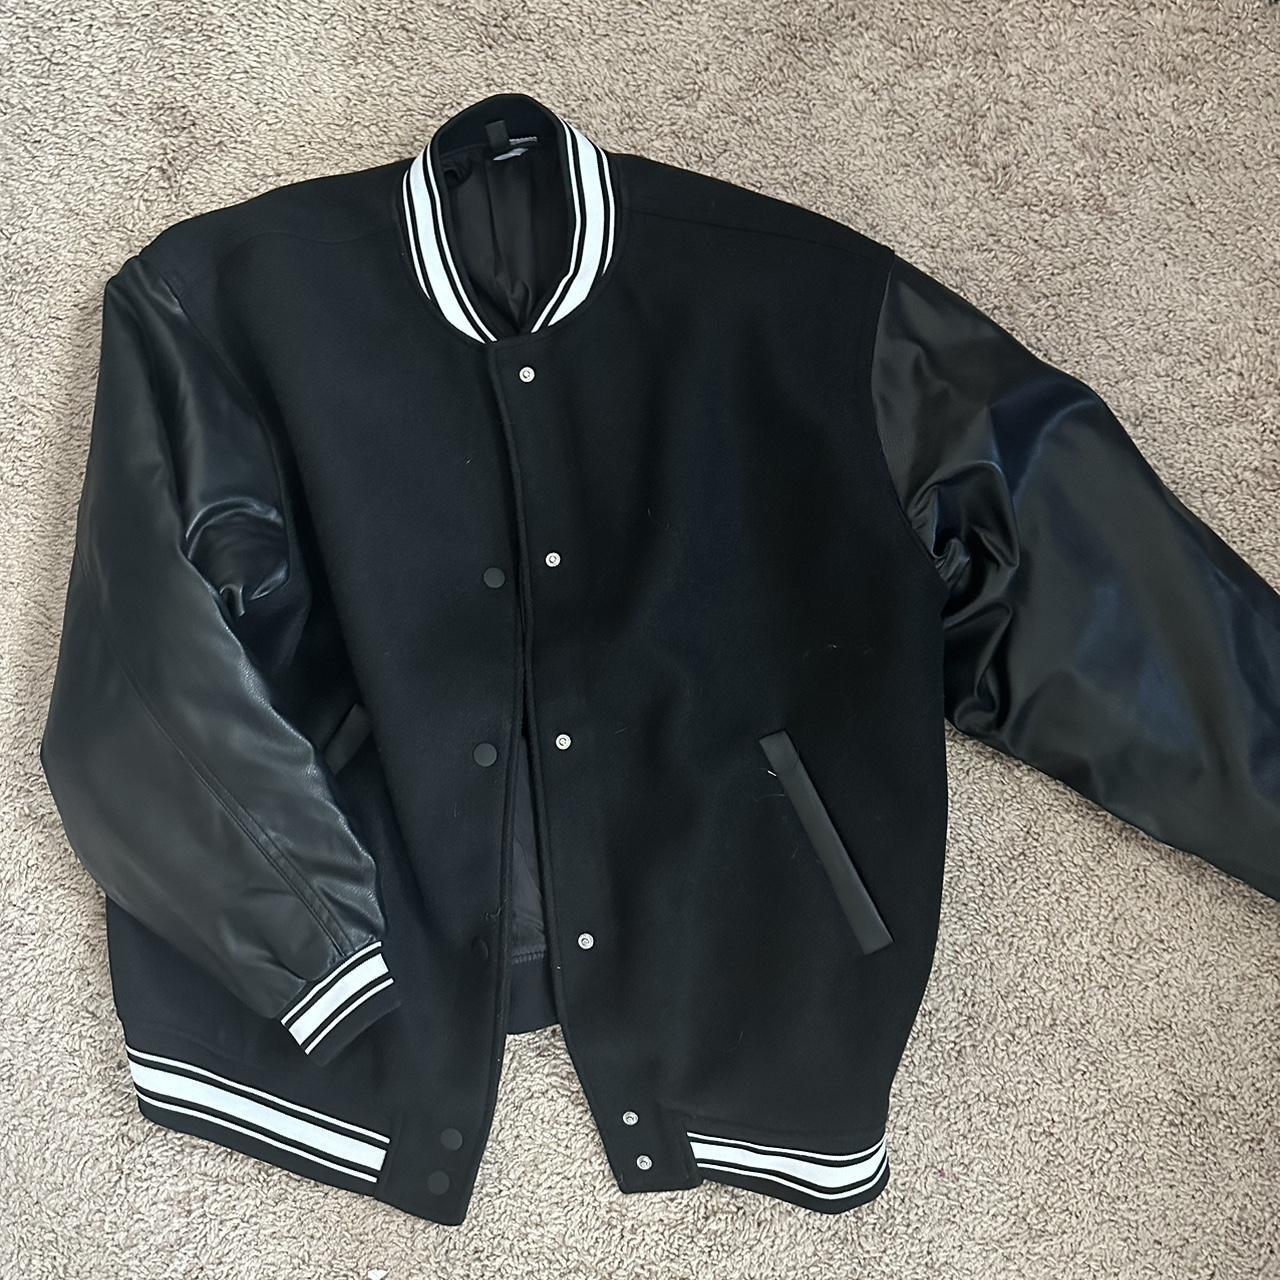 Cotton & Leather Jacket Never worn - Depop